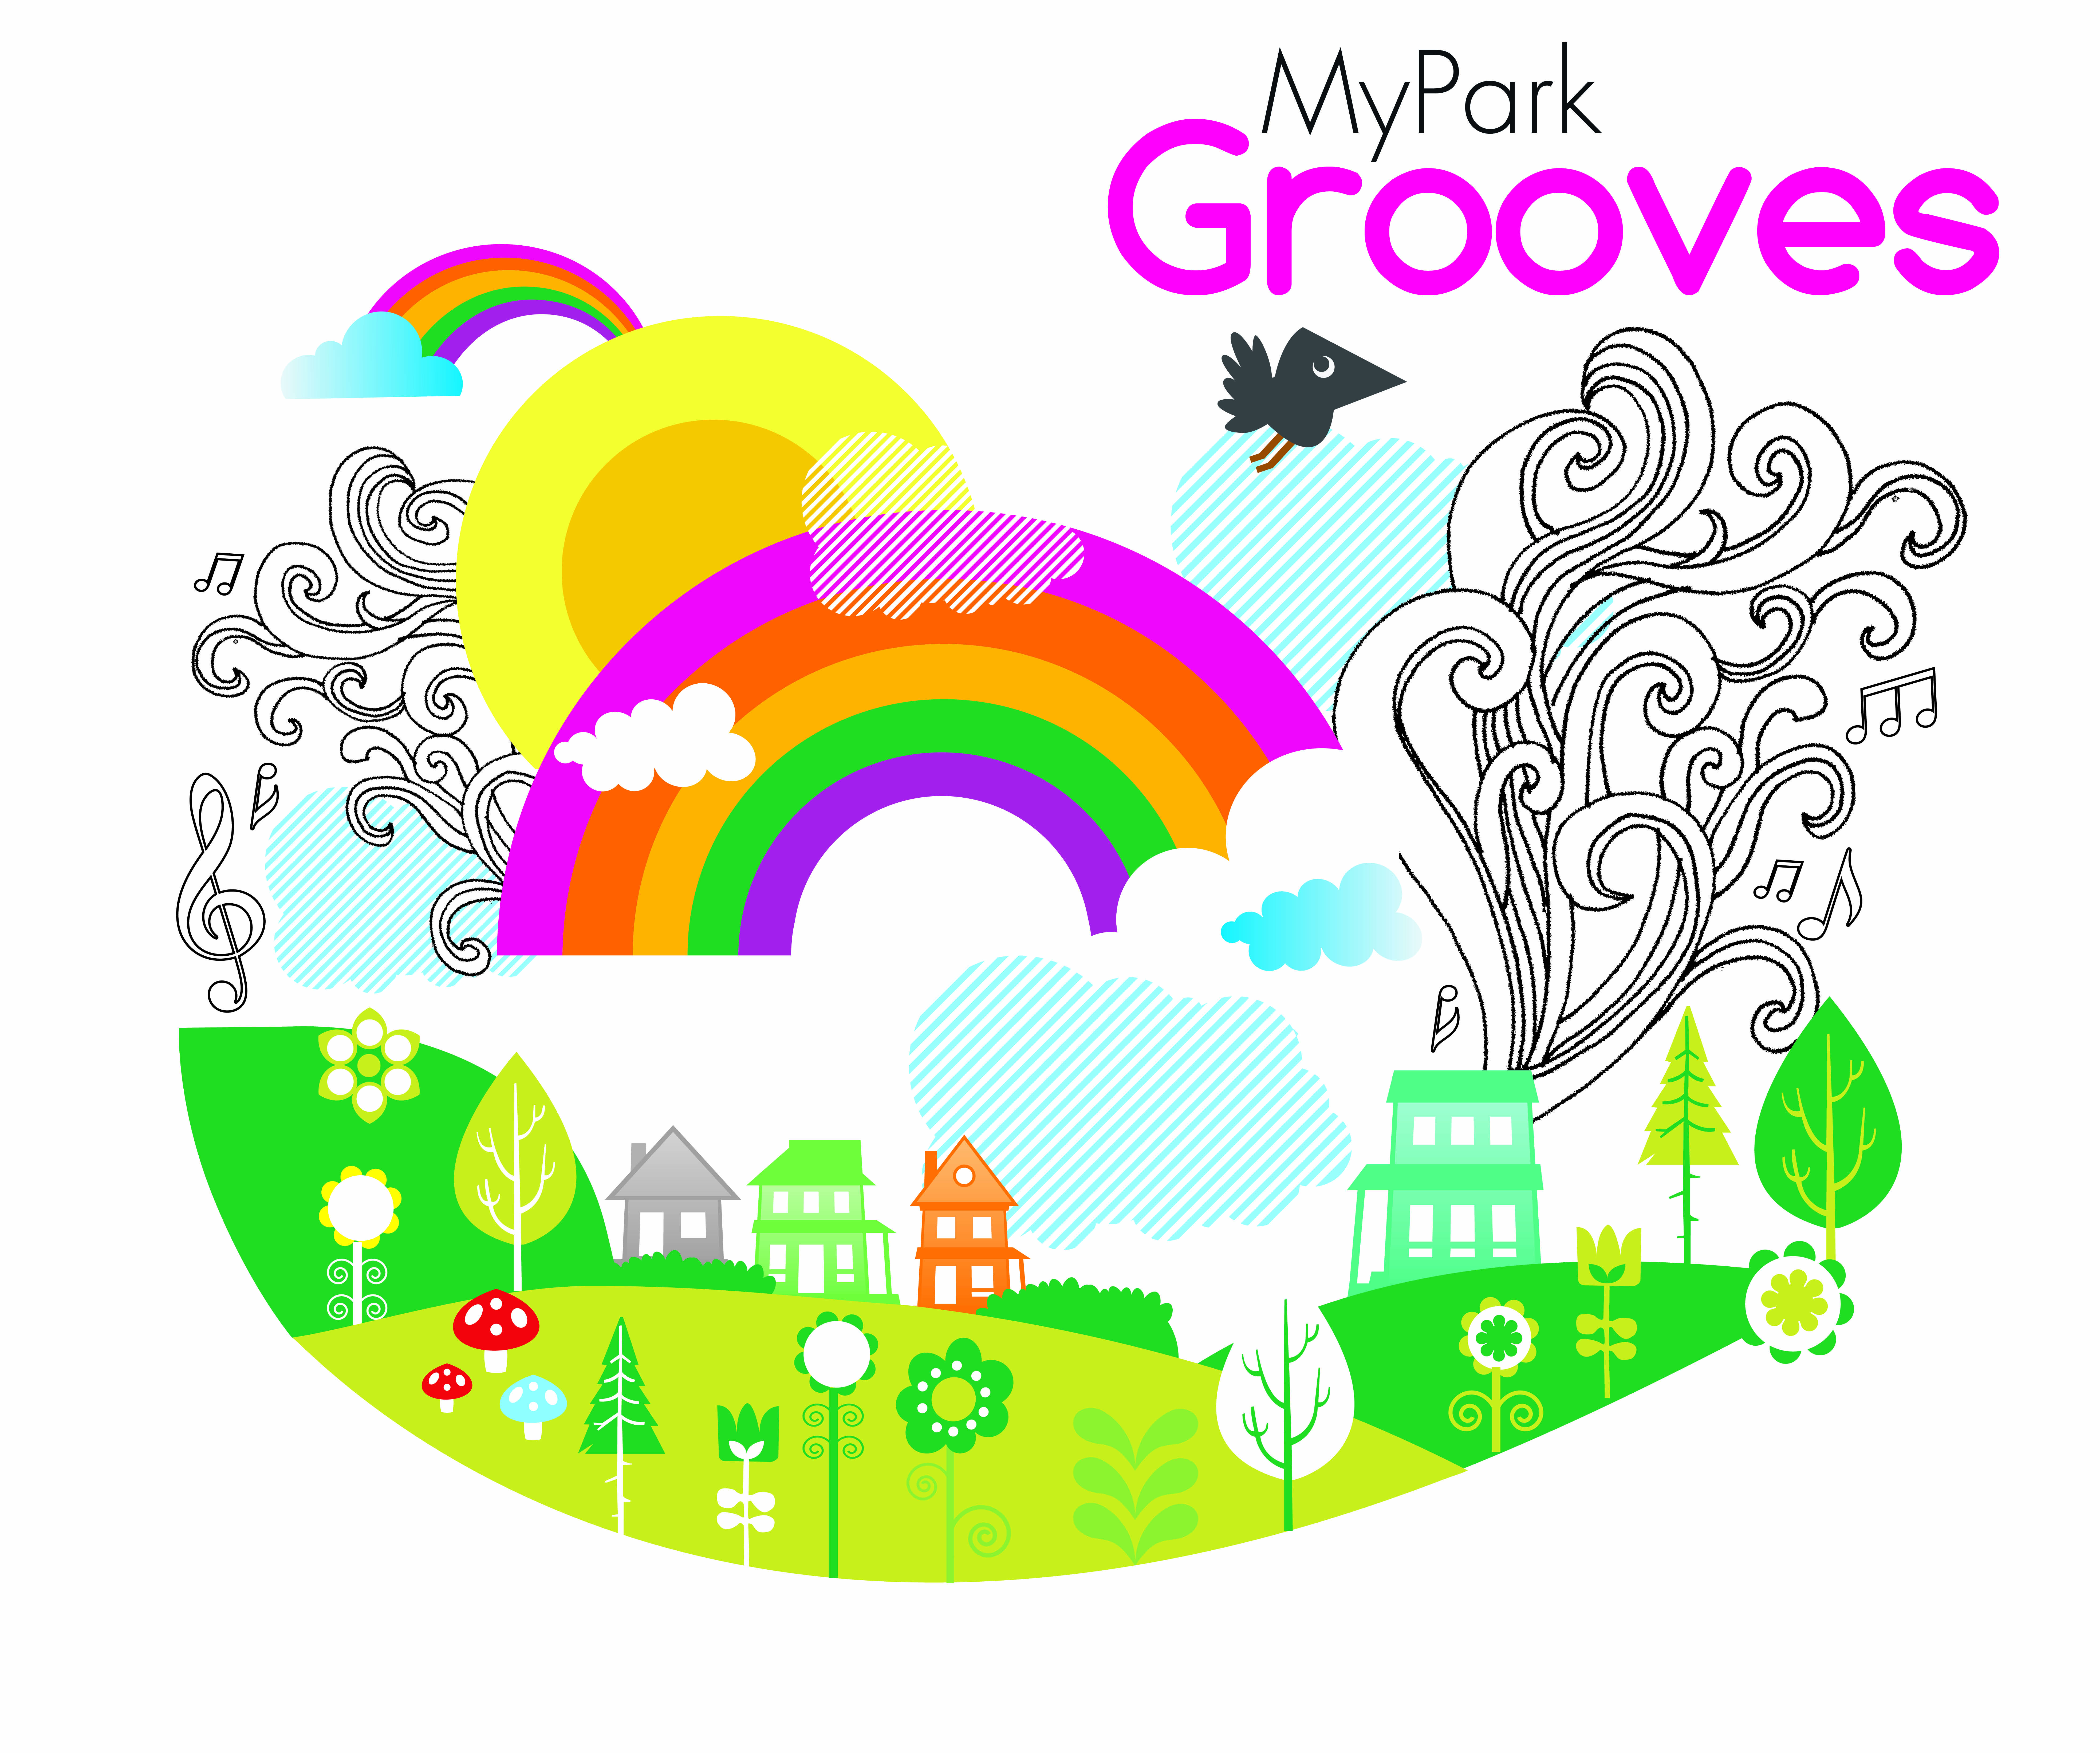 MyPark Grooves Quarry Adventure Park - City of Mandurah